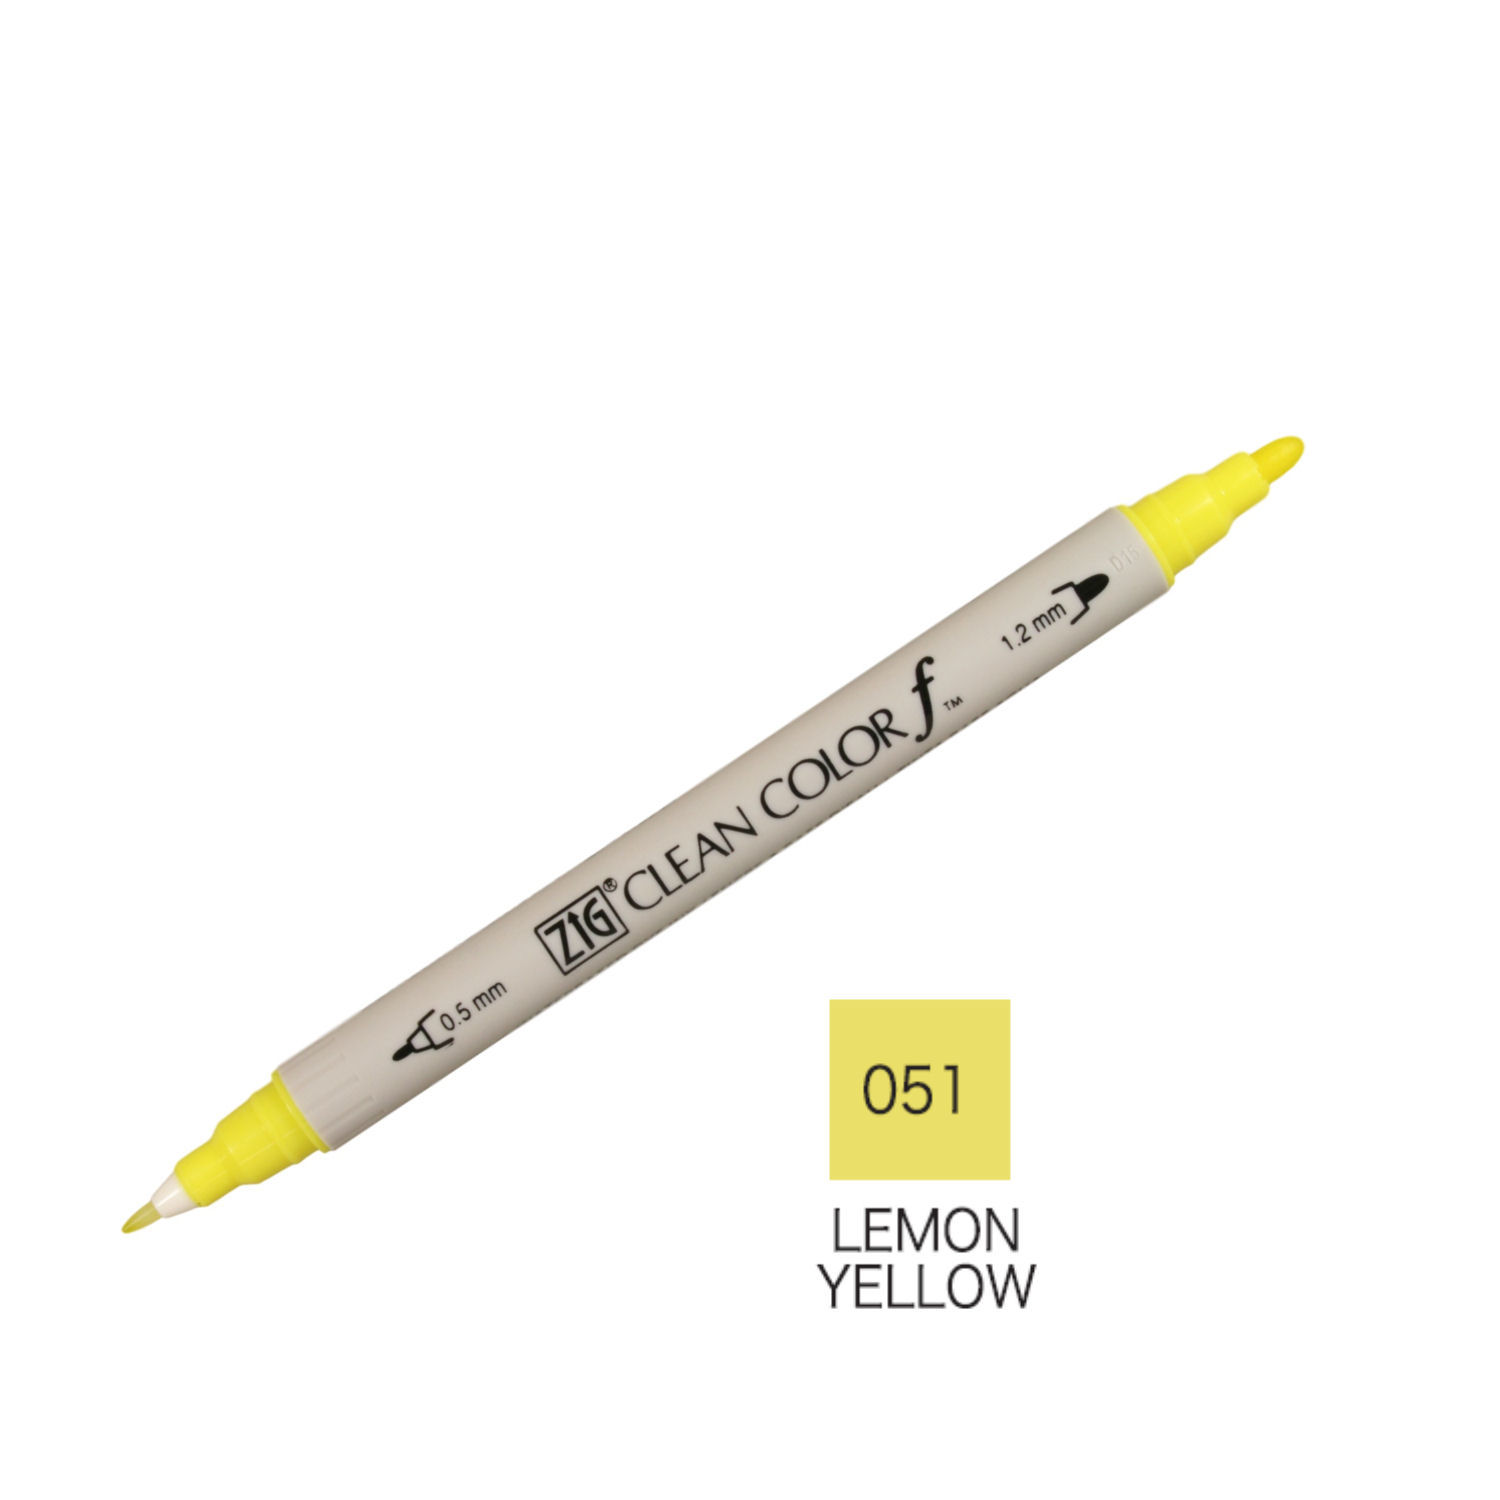 Zig Clean Color - 051 Lemon Yellow